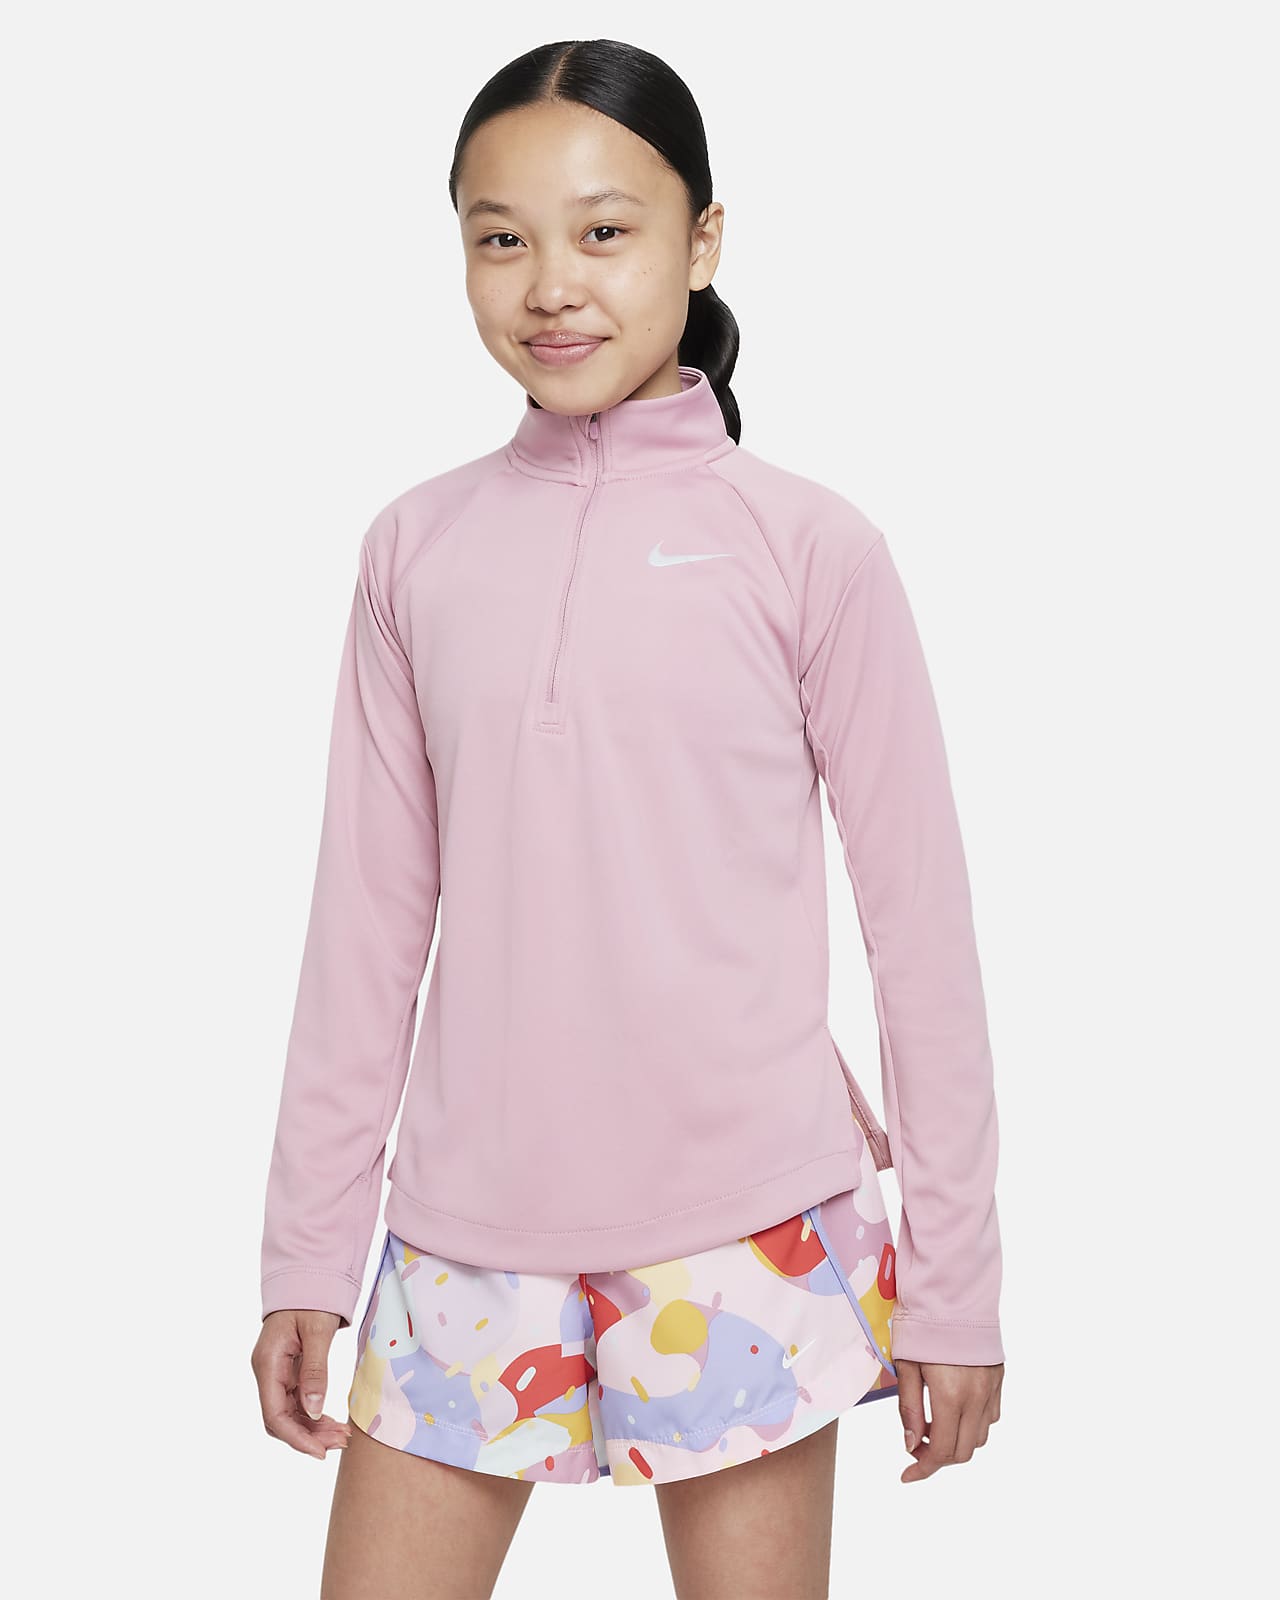 Nike Dri-FIT Big Kids' (Girls') Long-Sleeve Running Top